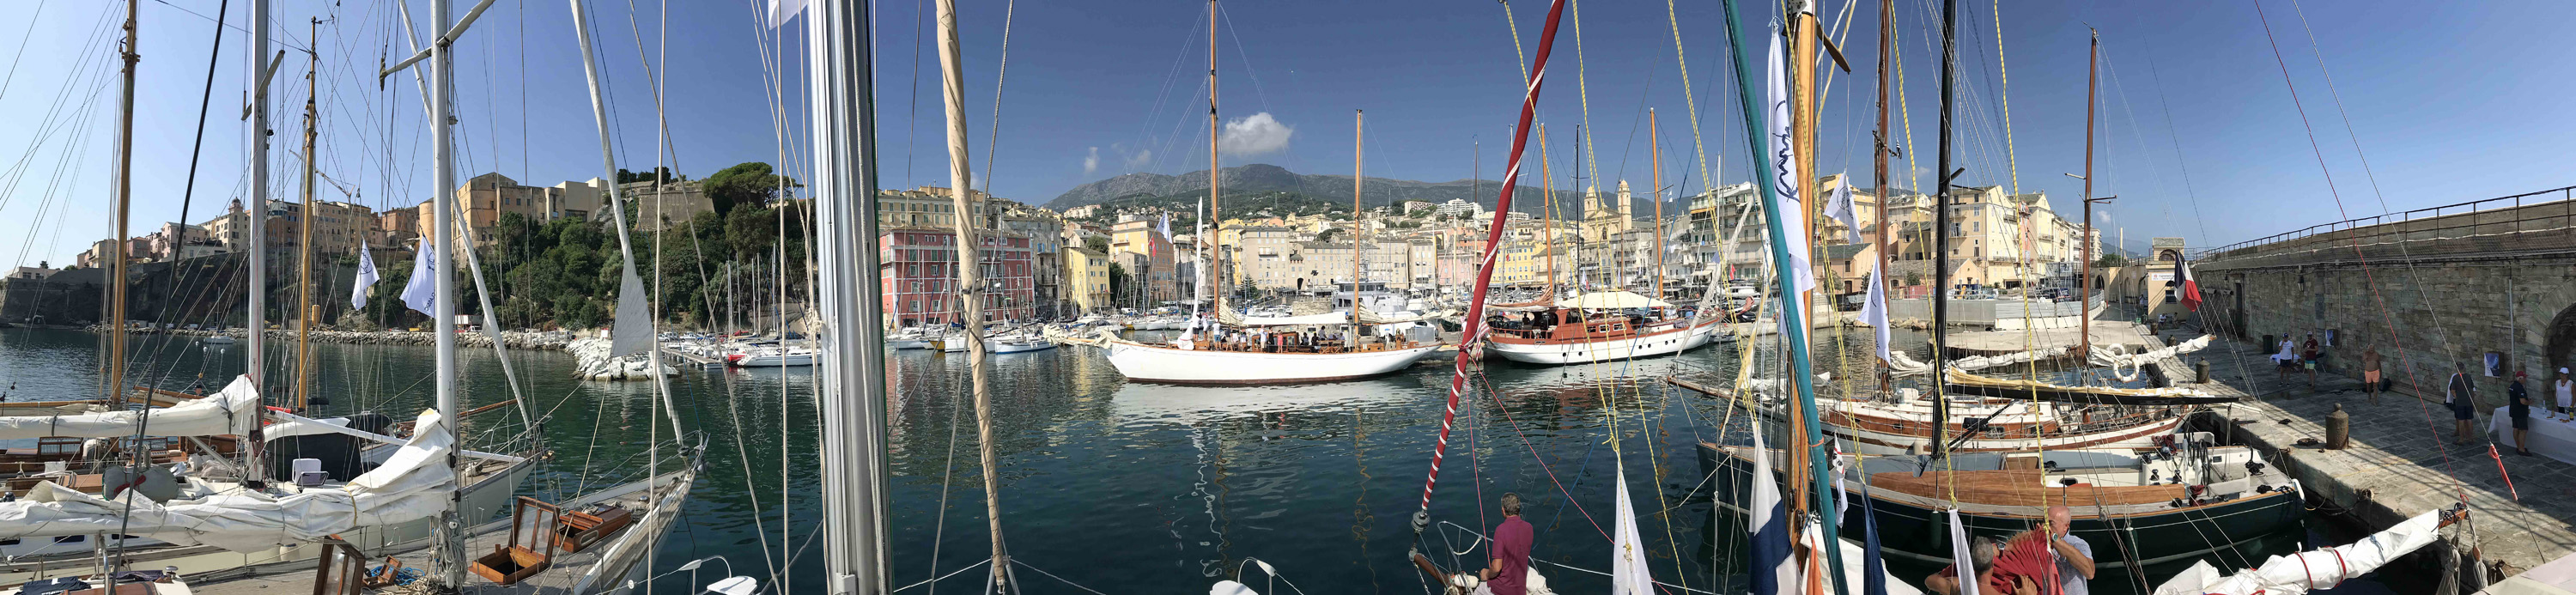 CC 2019 Bastia Vieux Port vendredi 30 août photo Thibaud Assante DR